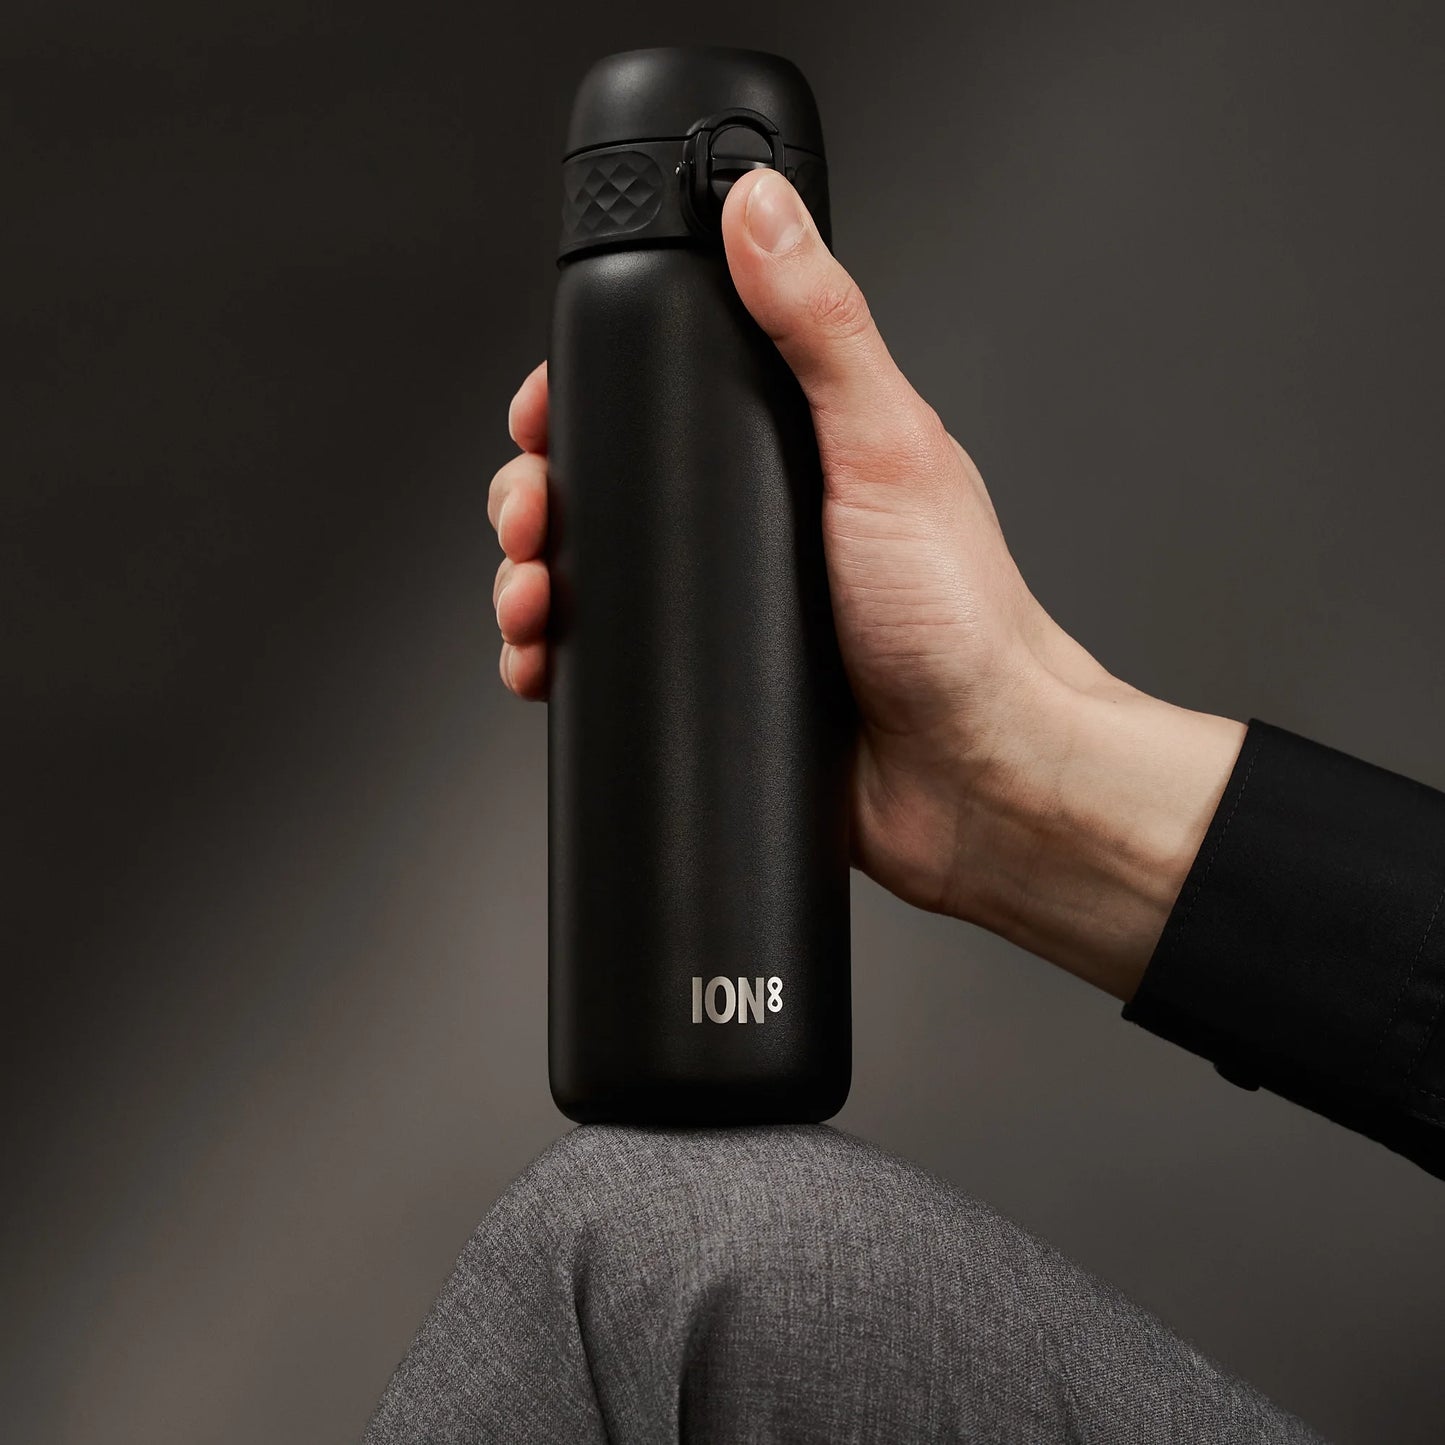 Leak Proof Slim Water Bottle, Stainless Steel, Black, 600ml (20oz)